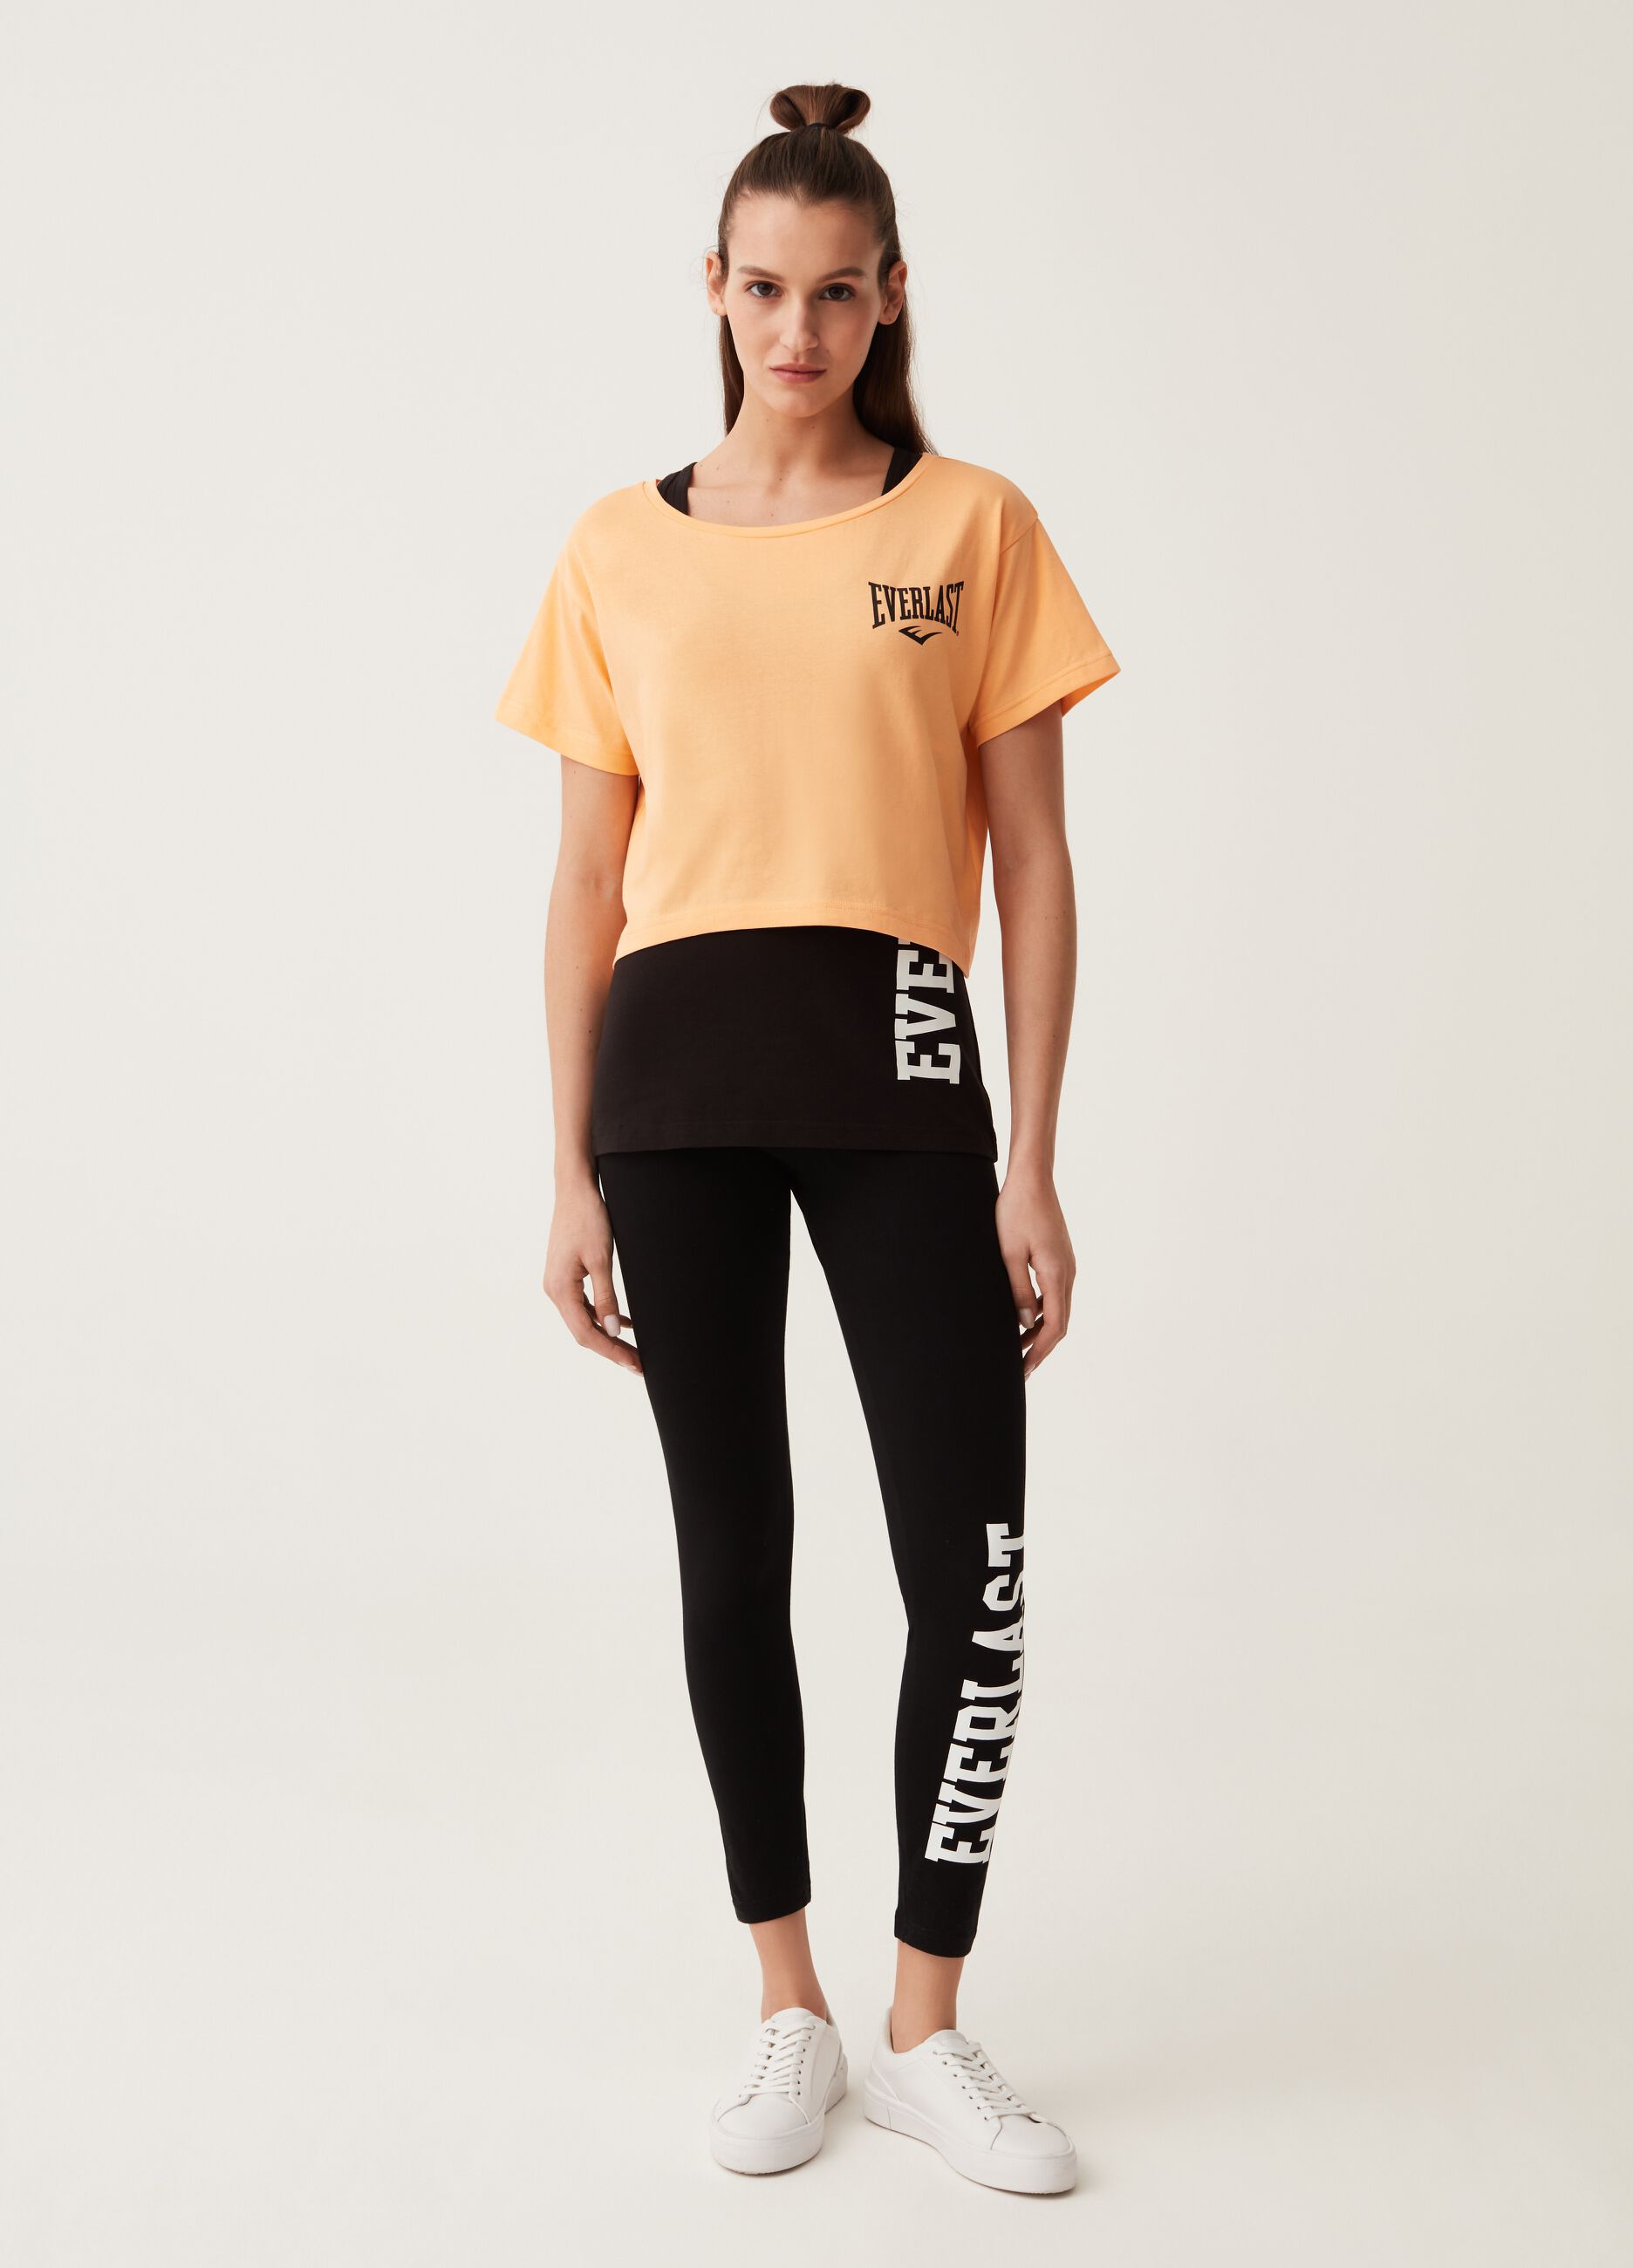 EVERLAST Woman's Orange/Black Stretch cotton leggings with Everlast print